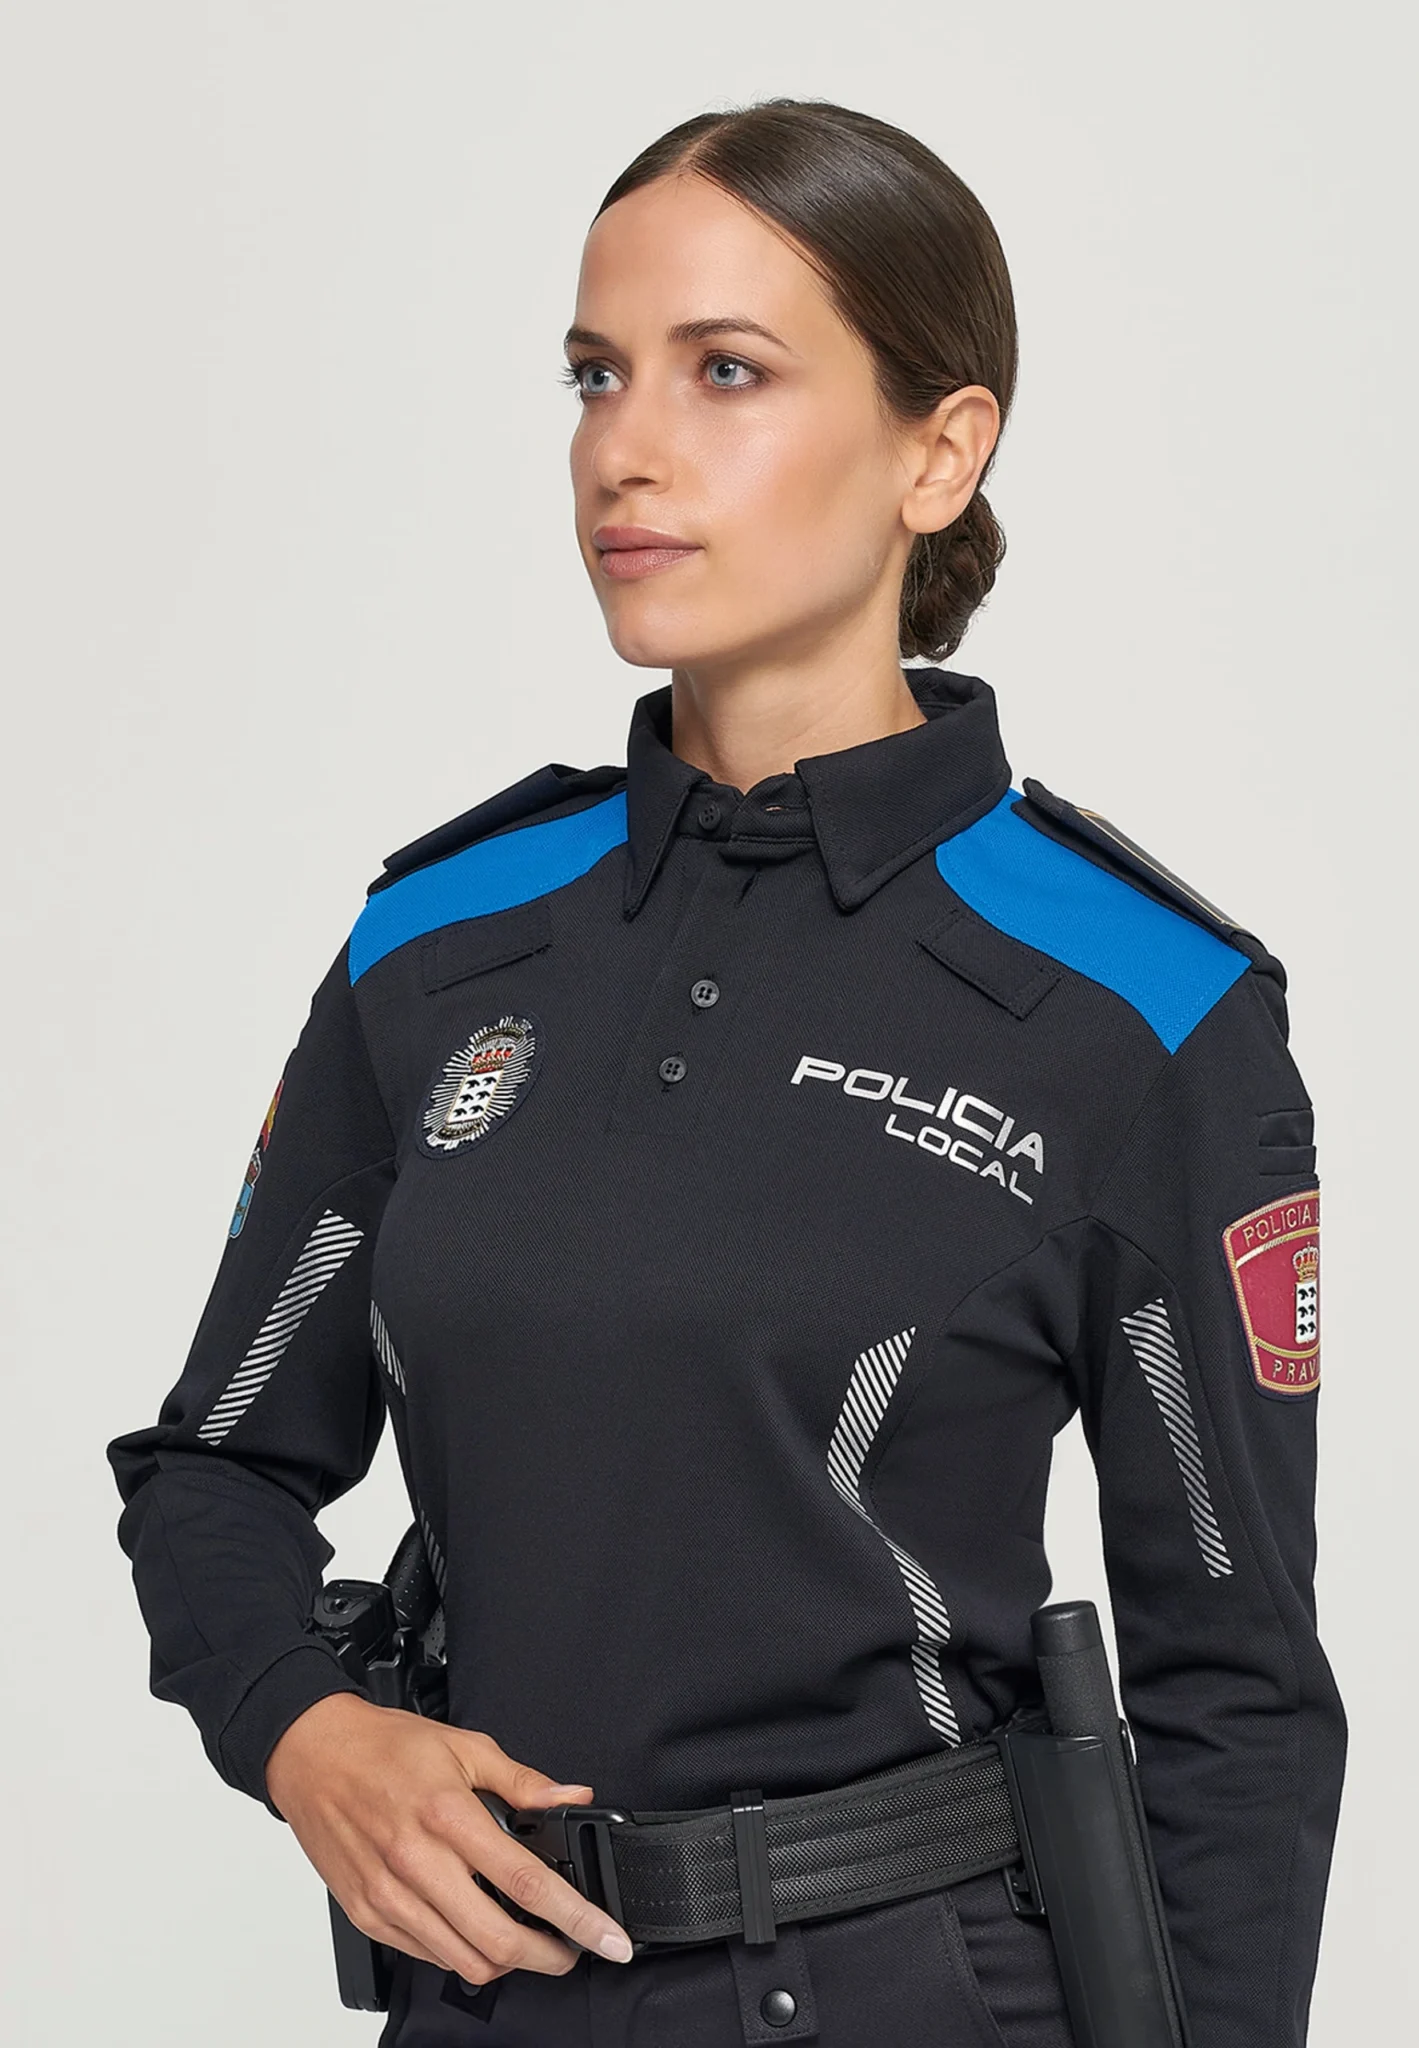 Asturias local police uniforms long-sleeved polo shirt